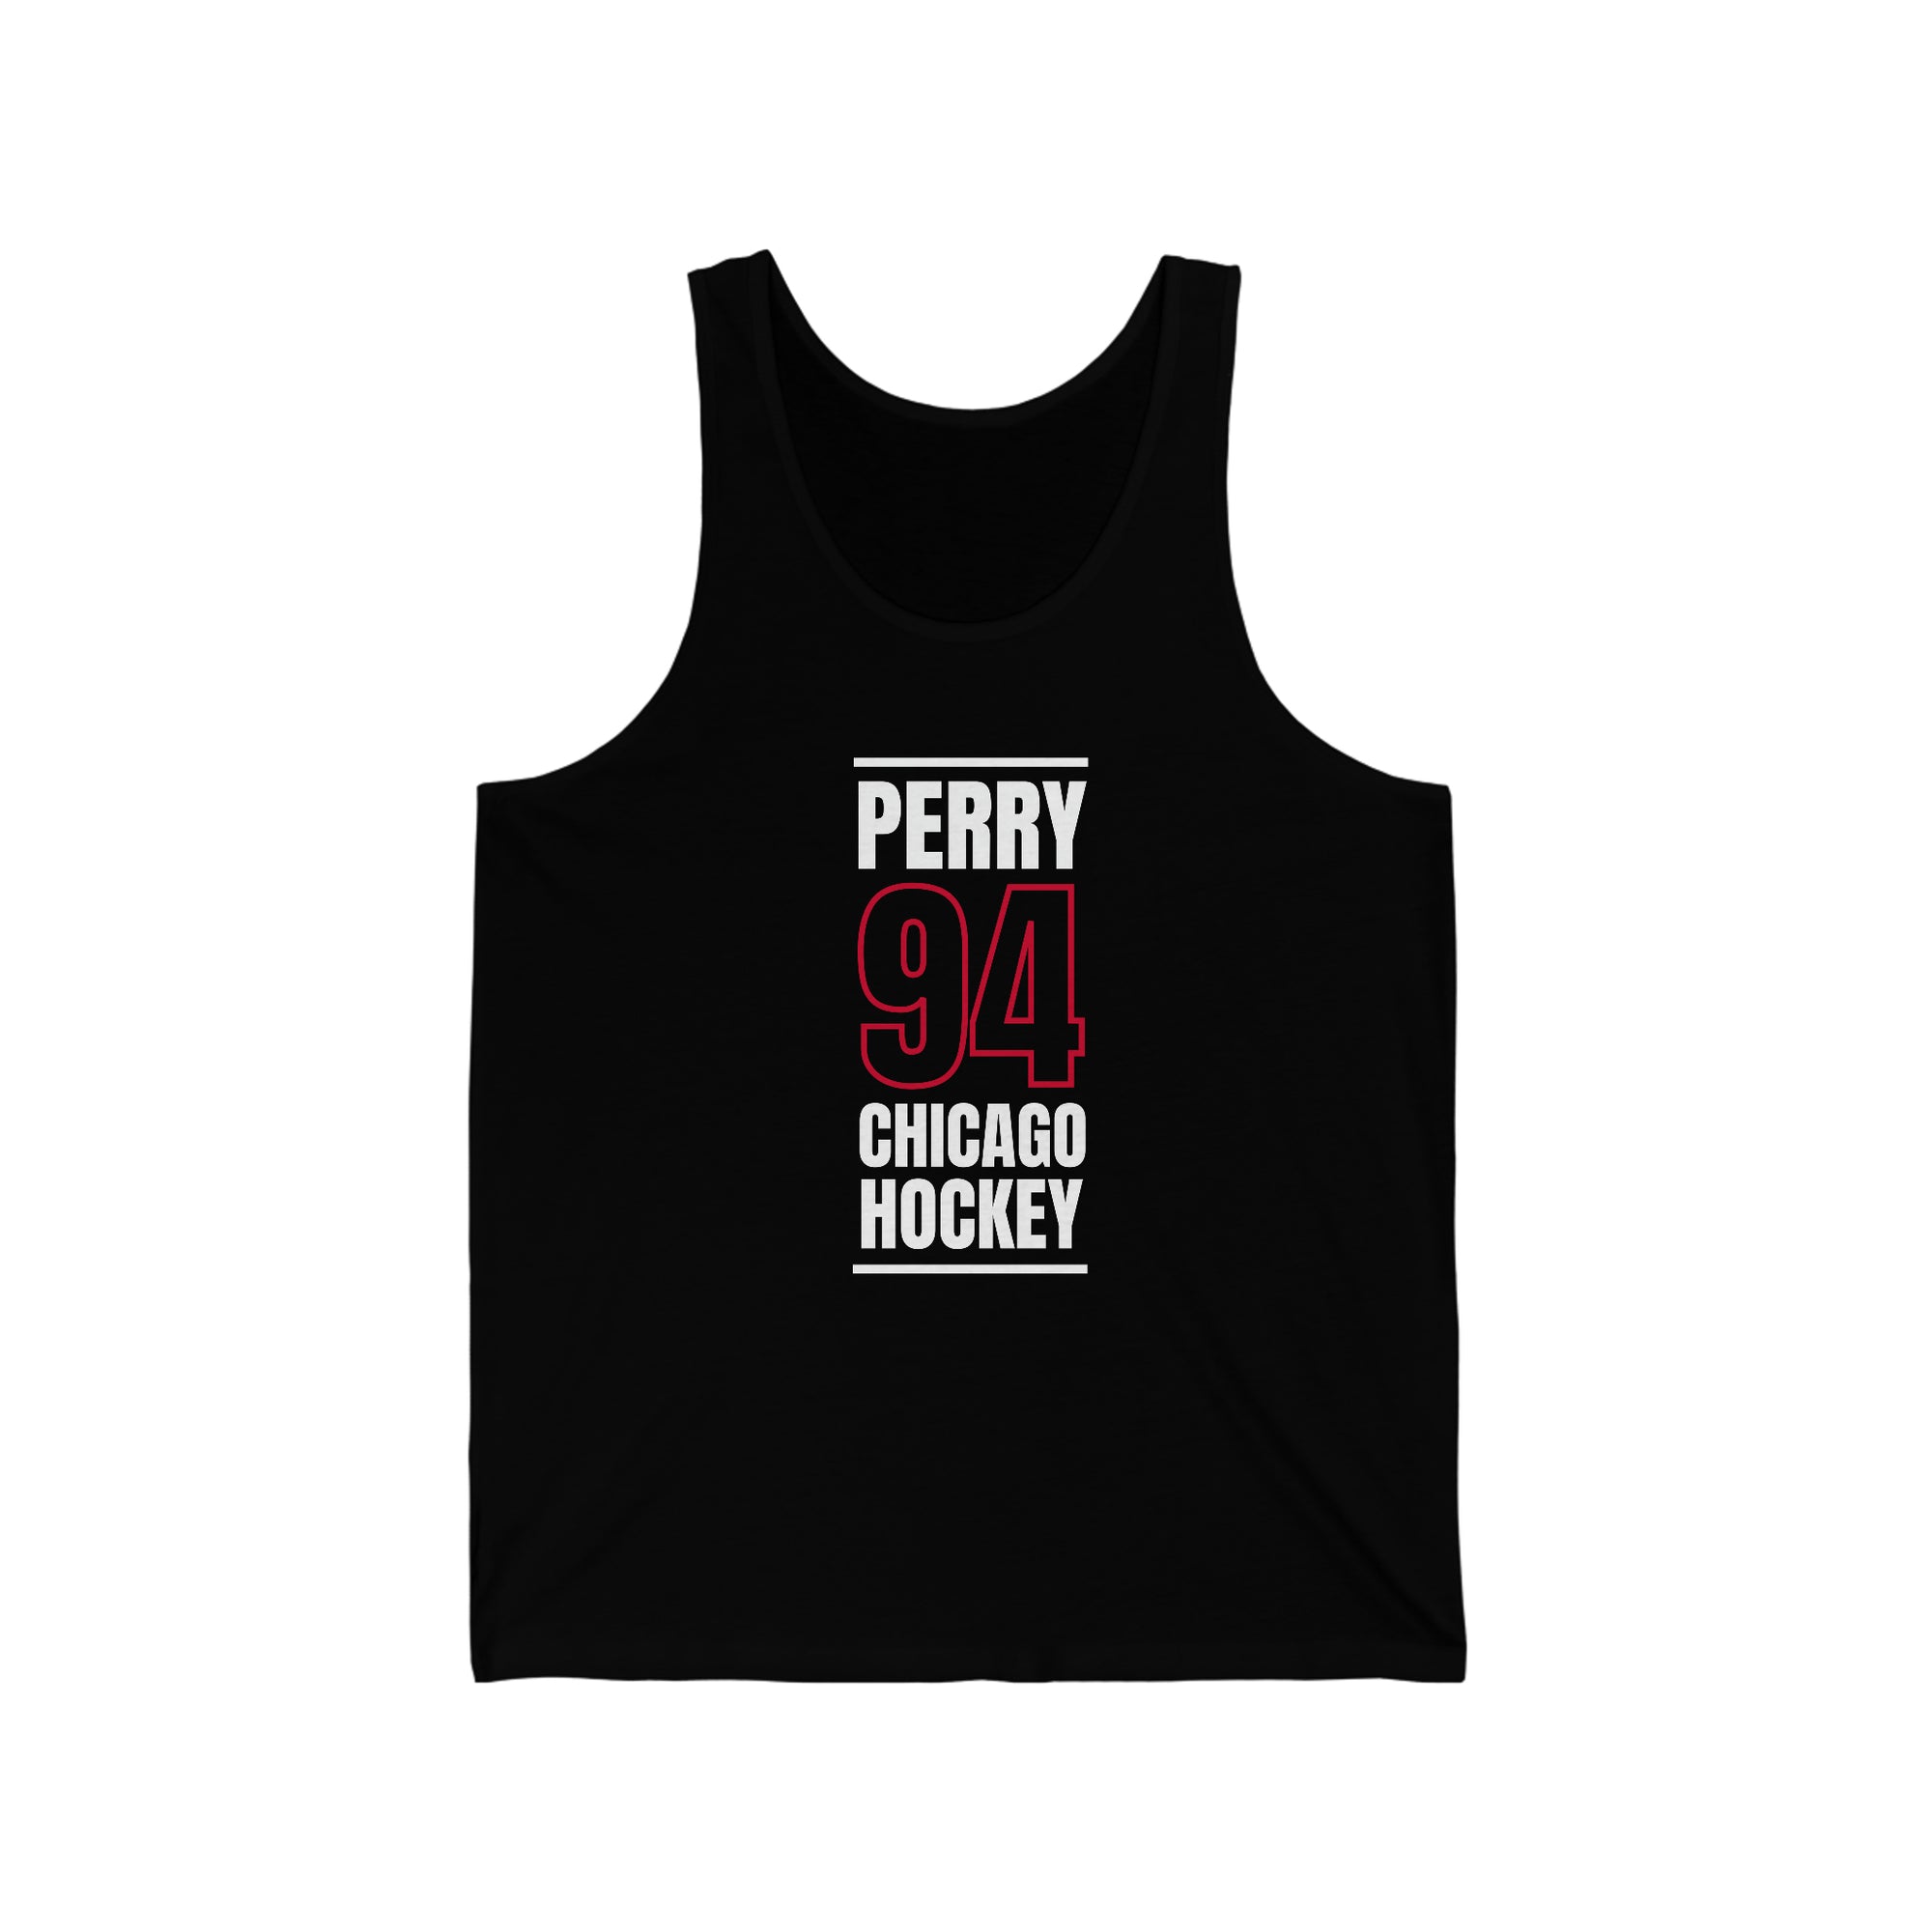 Perry 94 Chicago Hockey Black Vertical Design Unisex Jersey Tank Top